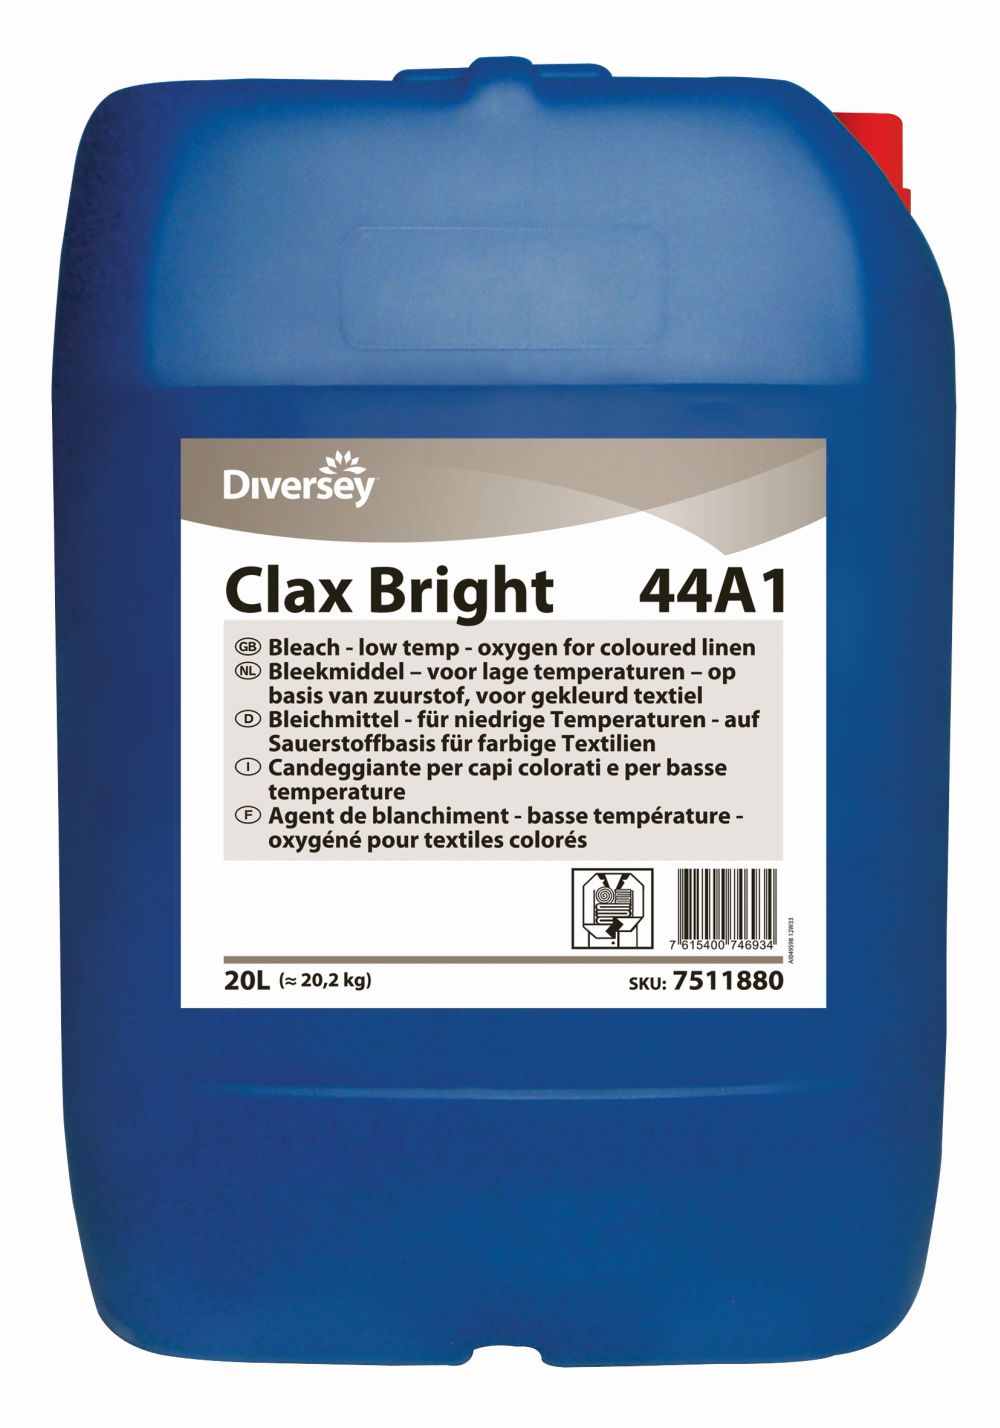 Diversey Clax Bright 4BL1 20ltr.